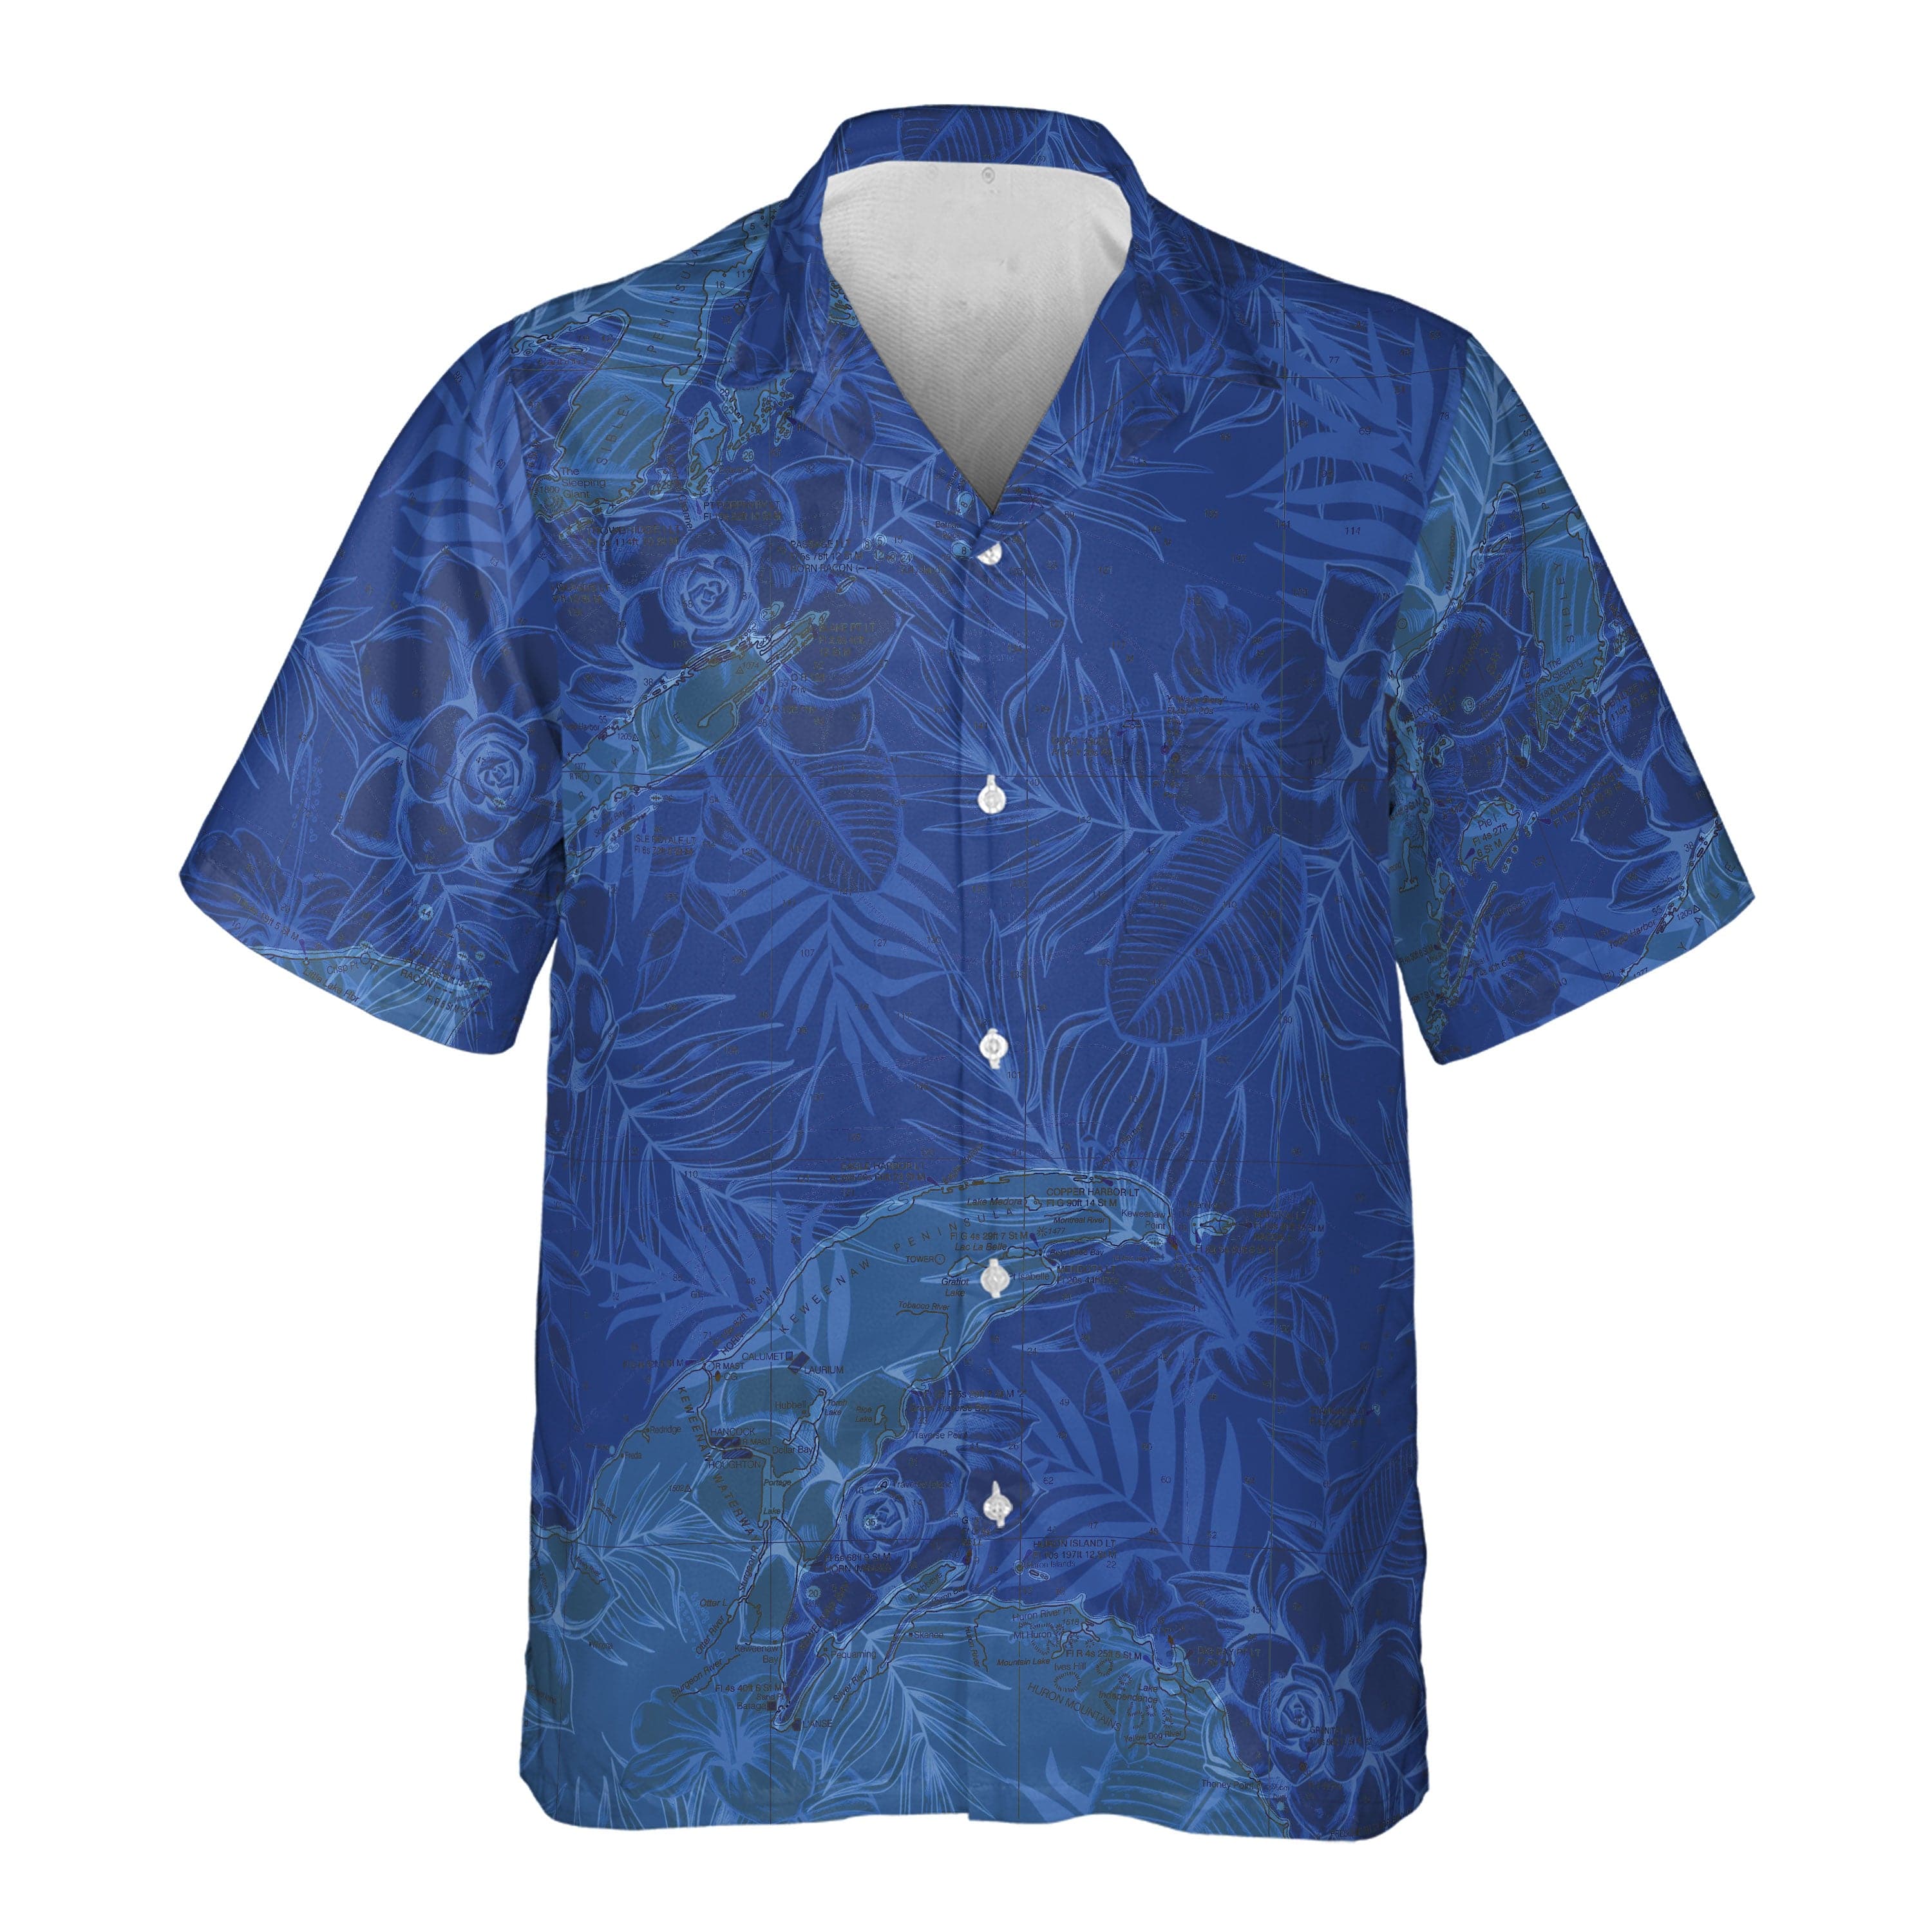 The Lake Superior Deep Blue Flowers Pocket Shirt